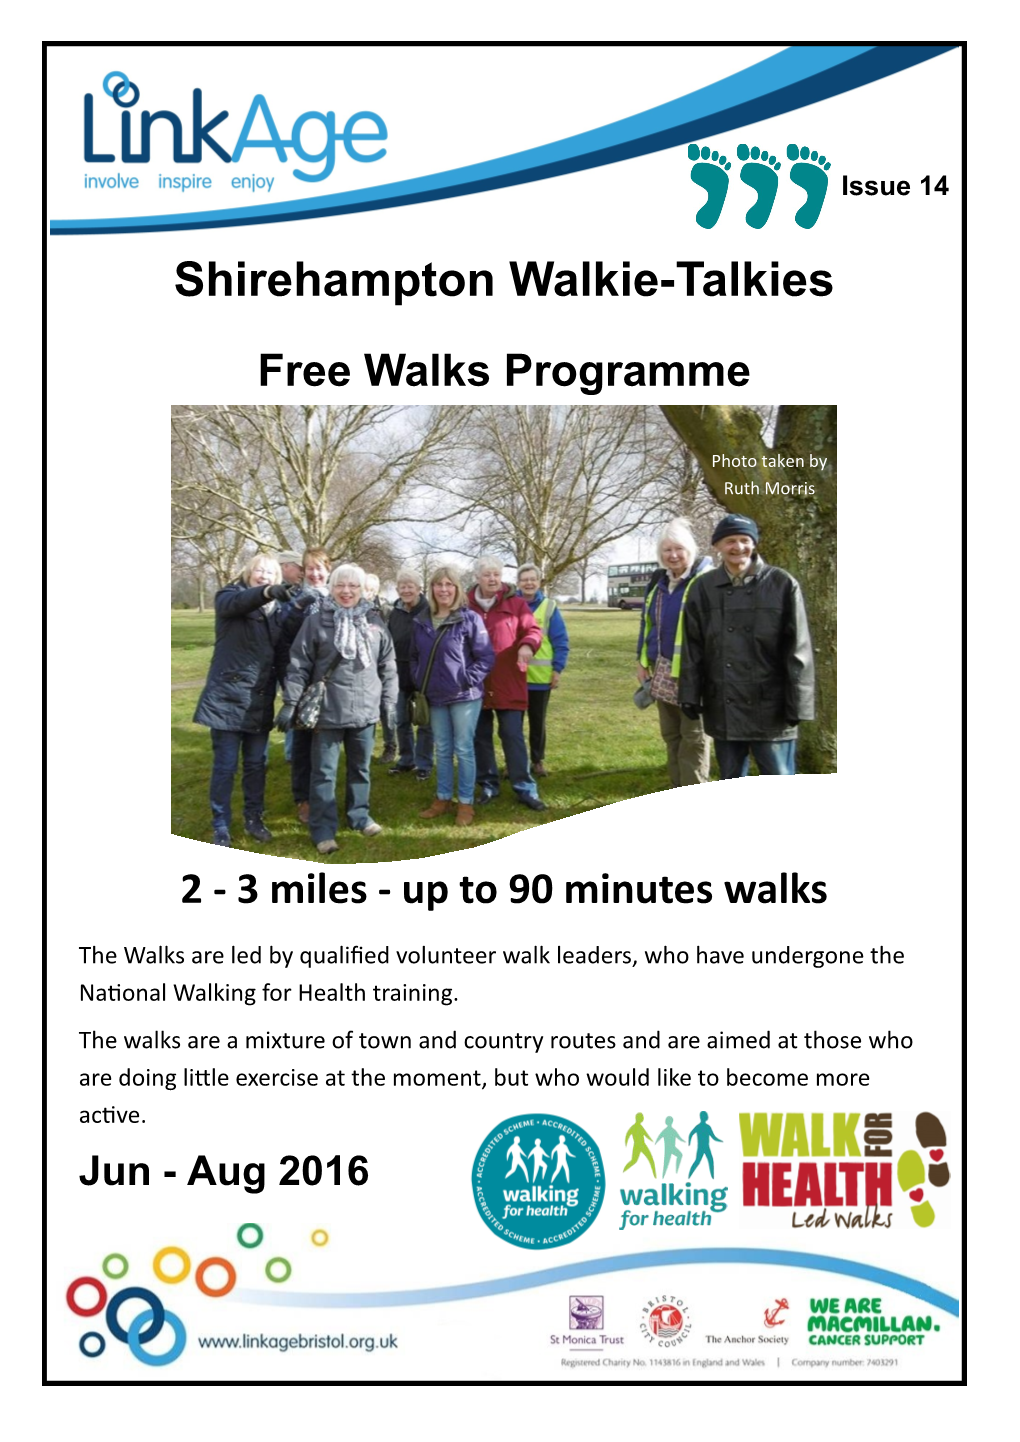 Shirehampton Walkie-Talkies Free Walks Programme